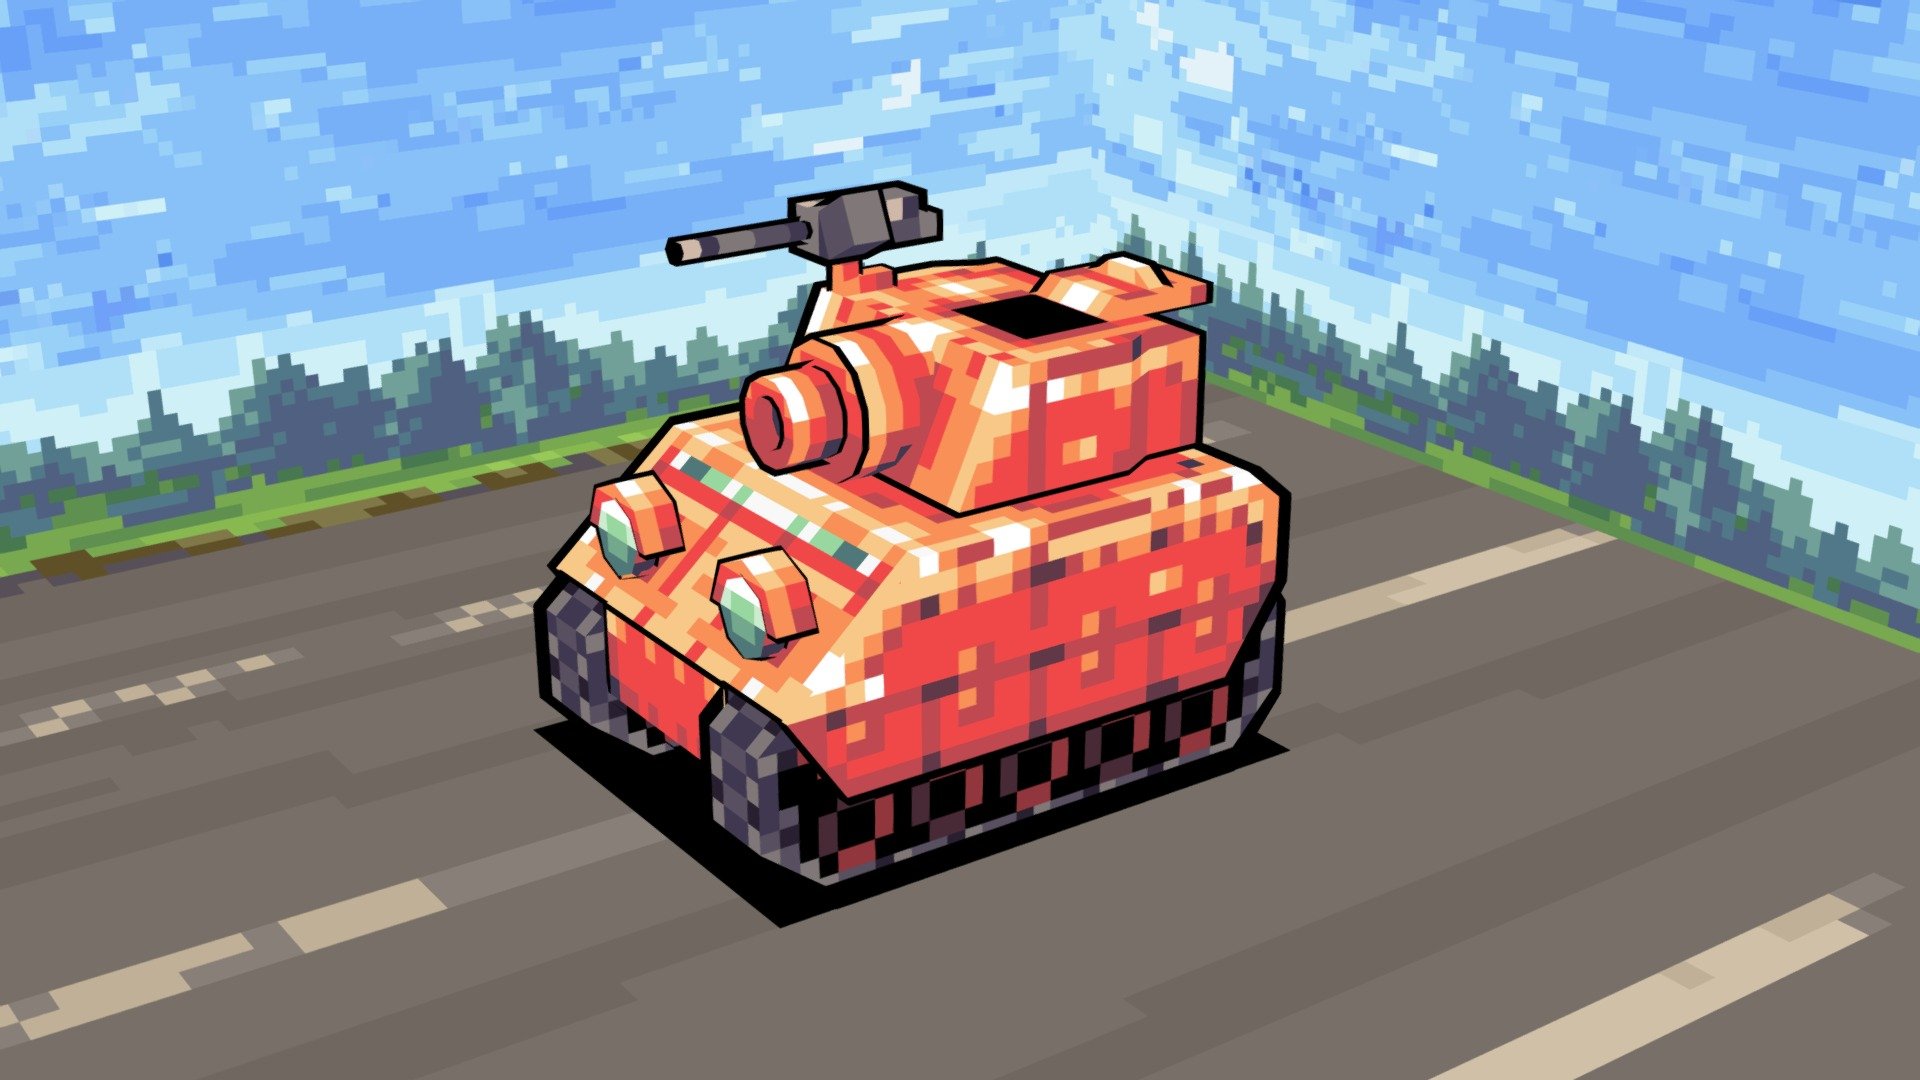 advance-wars-orange-star-tank-3d-model-by-yohan-schmitz-mackaged-b1485de-sketchfab